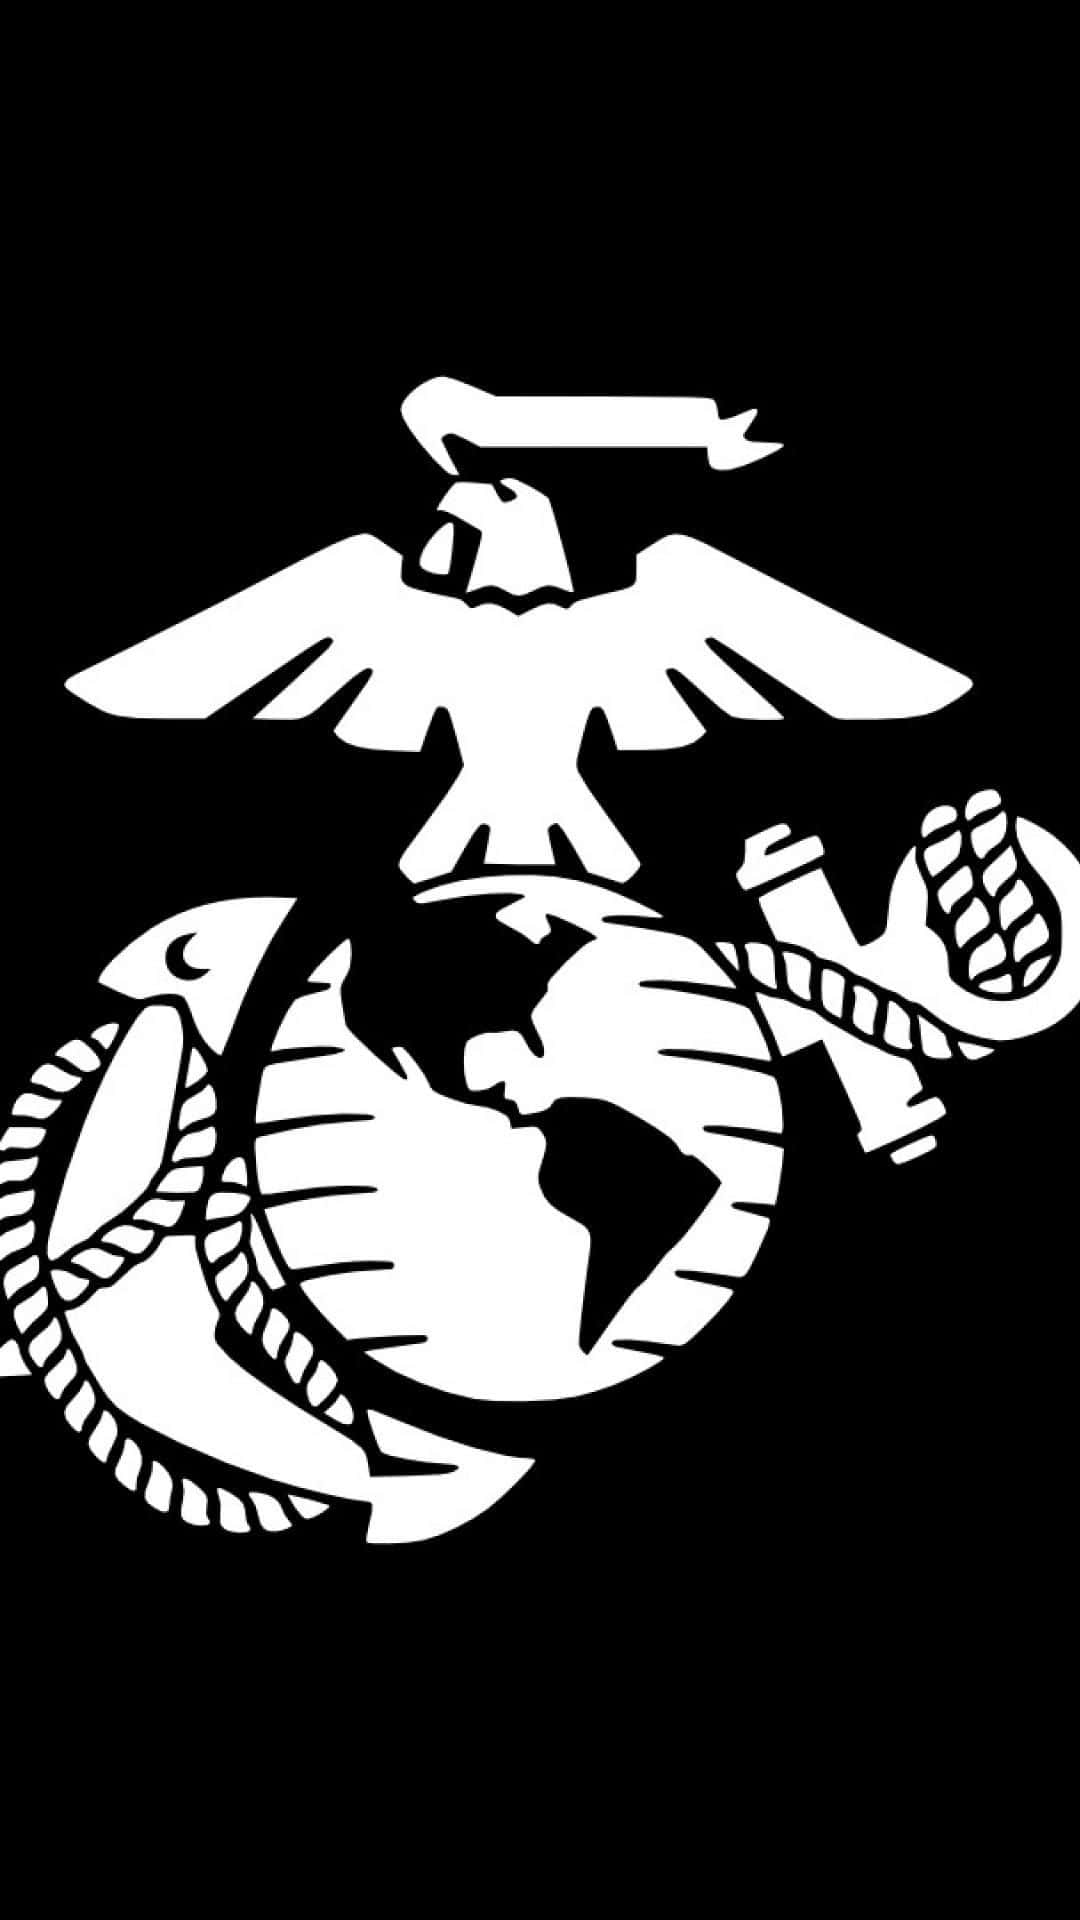 Us Marine Corps Emblem Decal Wallpaper